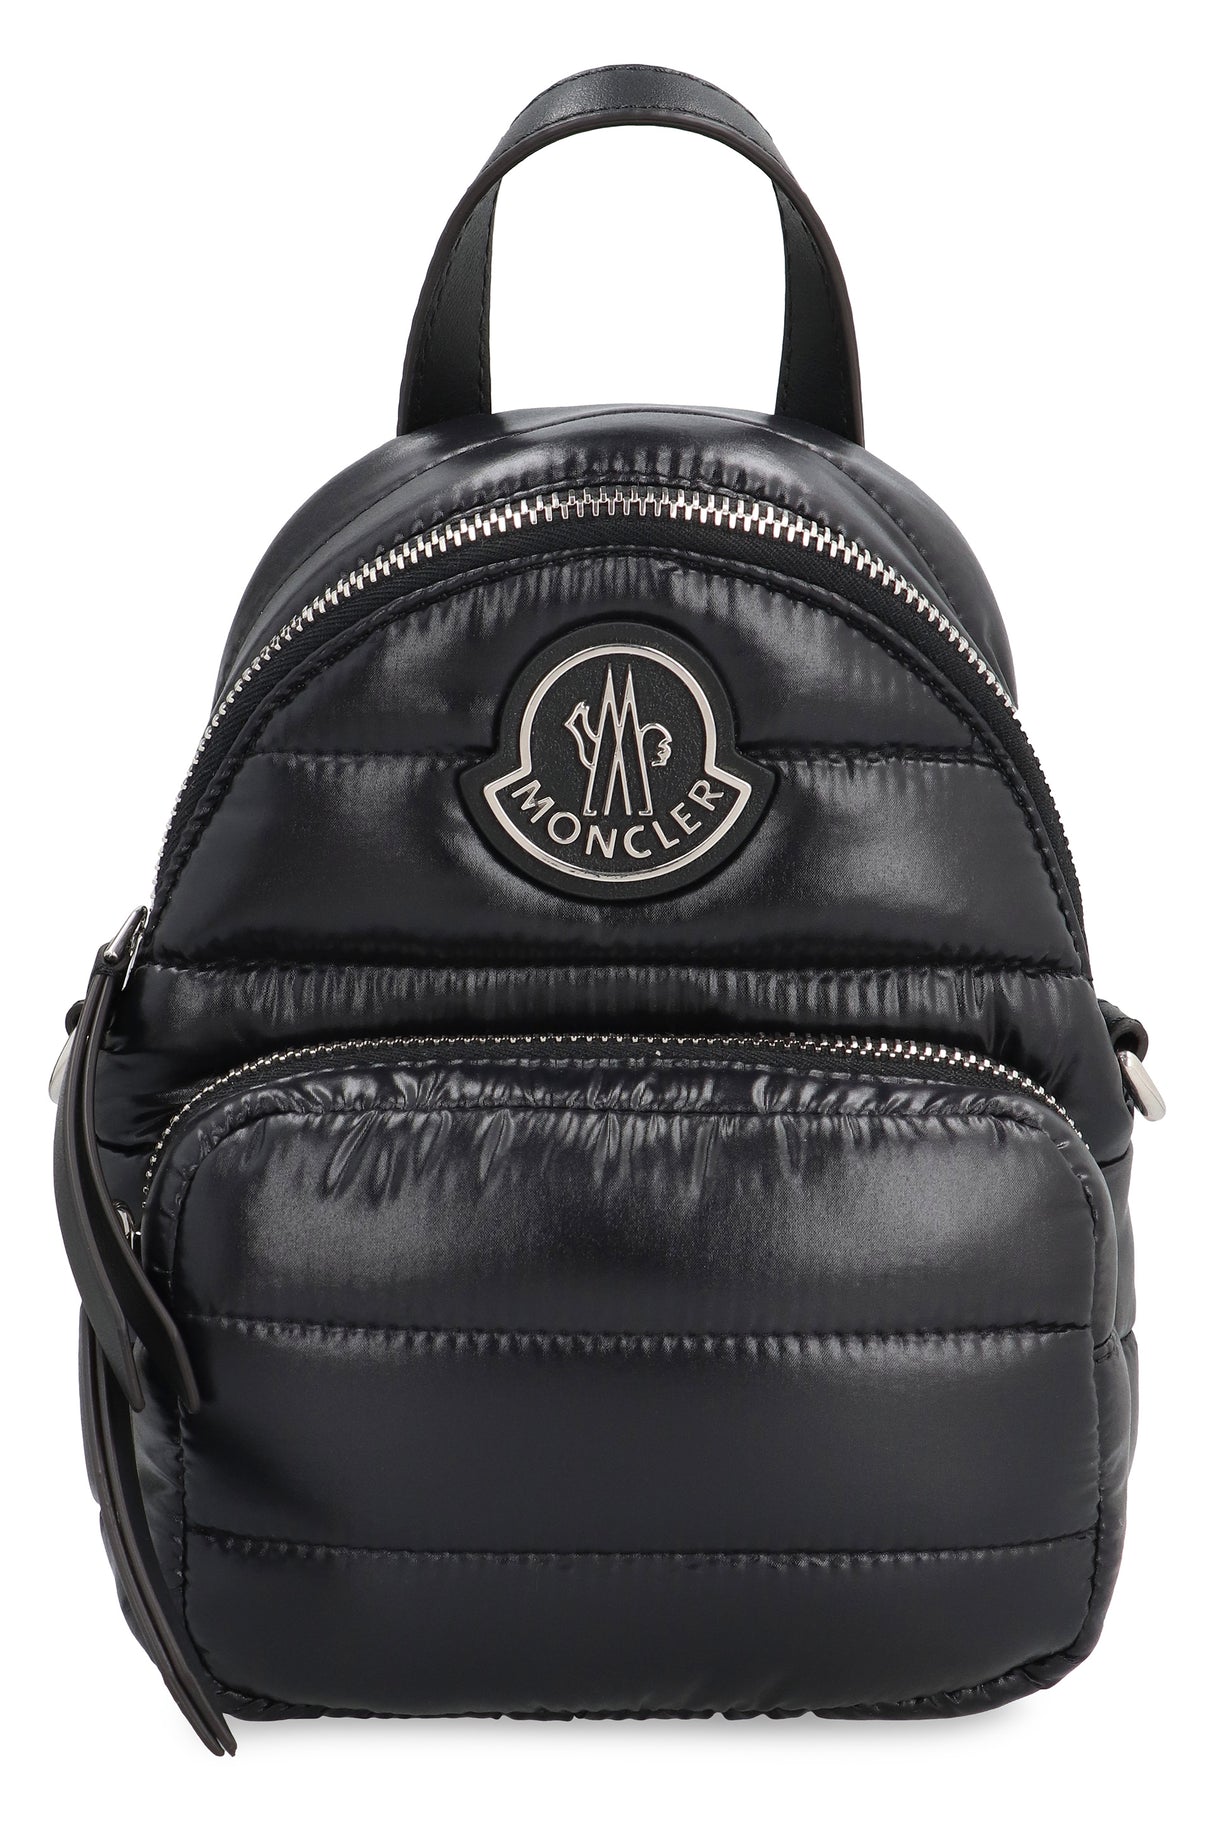 MONCLER Black Nylon Messenger Handbag - Padded, Removable Strap, Silver-Tone Hardware